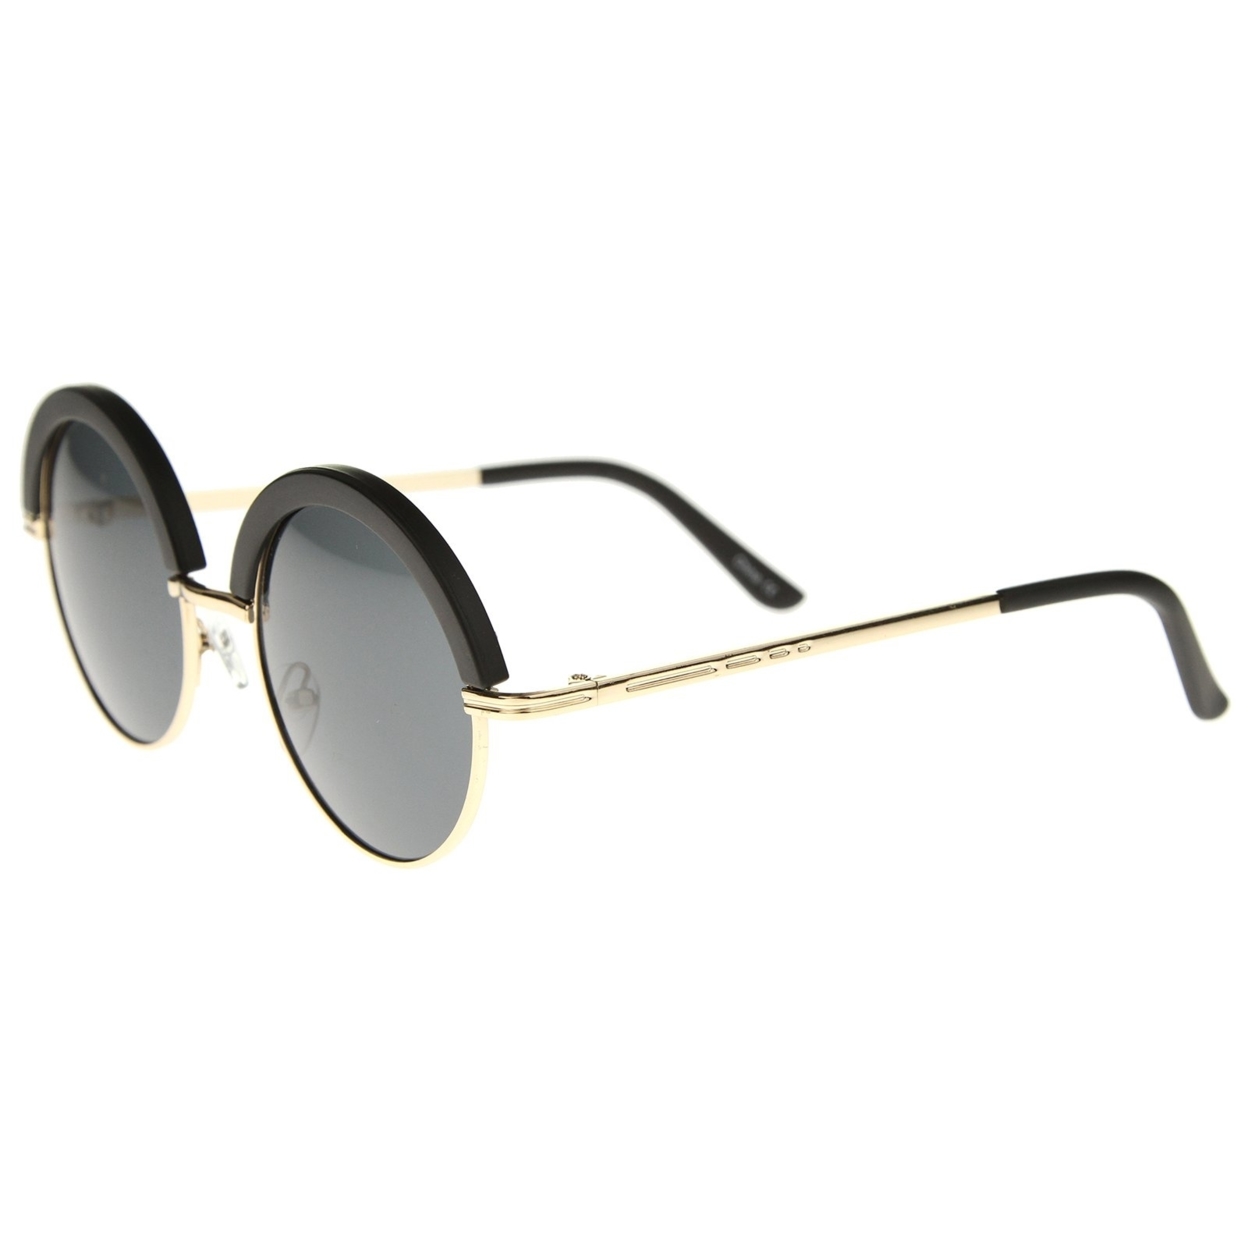 Mod Fashion Oversize Half-Frame Brow Eyelid Round Sunglasses 50mm - Shiny Black-Silver / Smoke